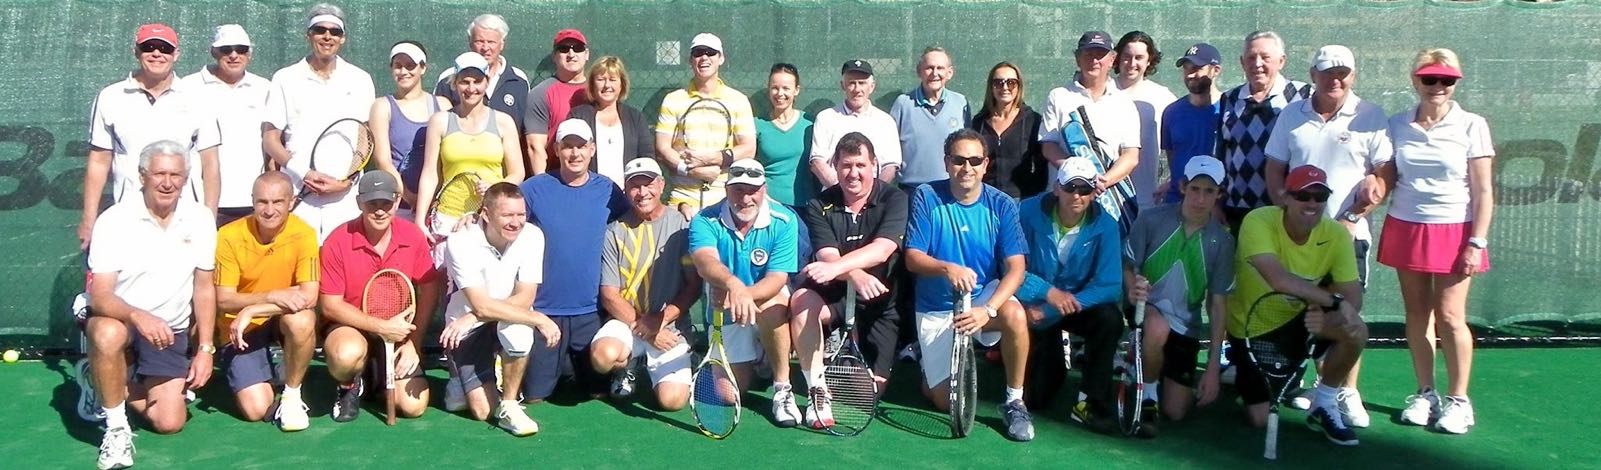 Manly Tennis Club Members